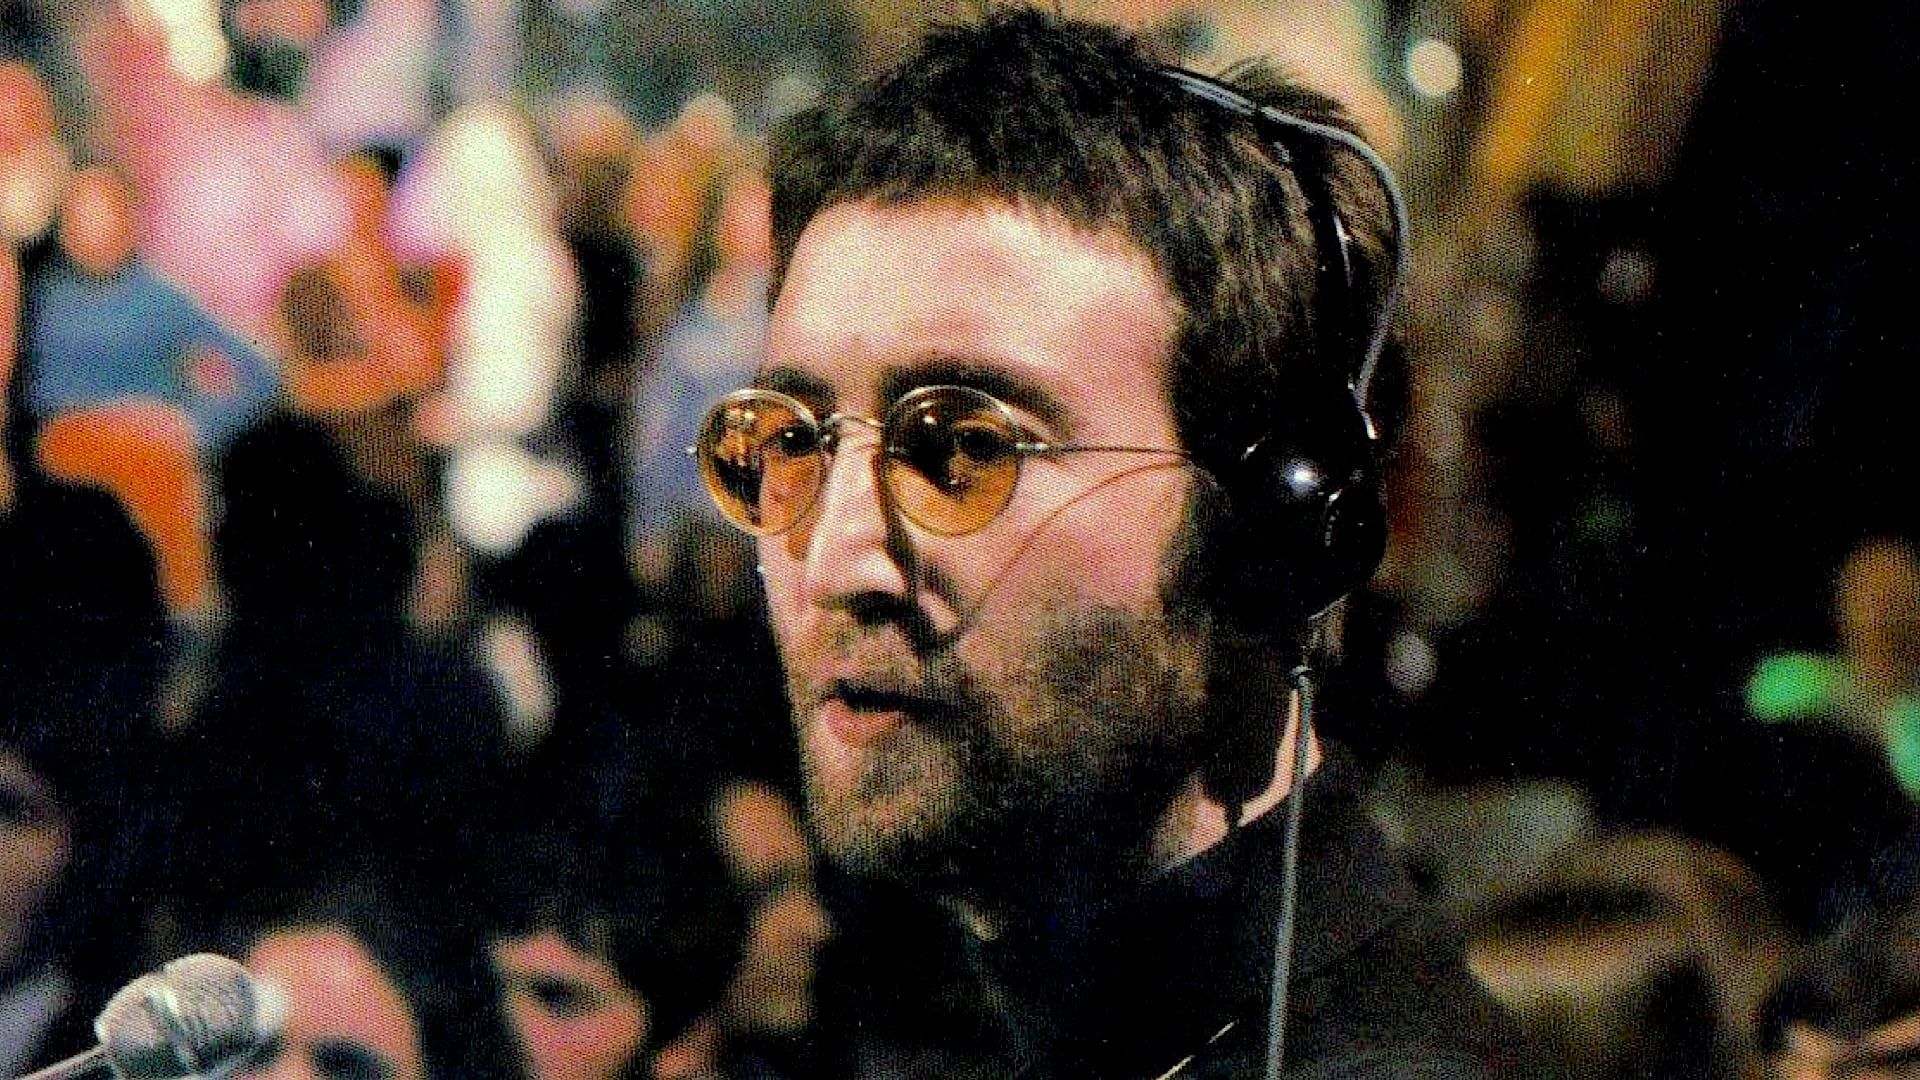 John Lennon and the Plastic Ono Band: Sweet Toronto background